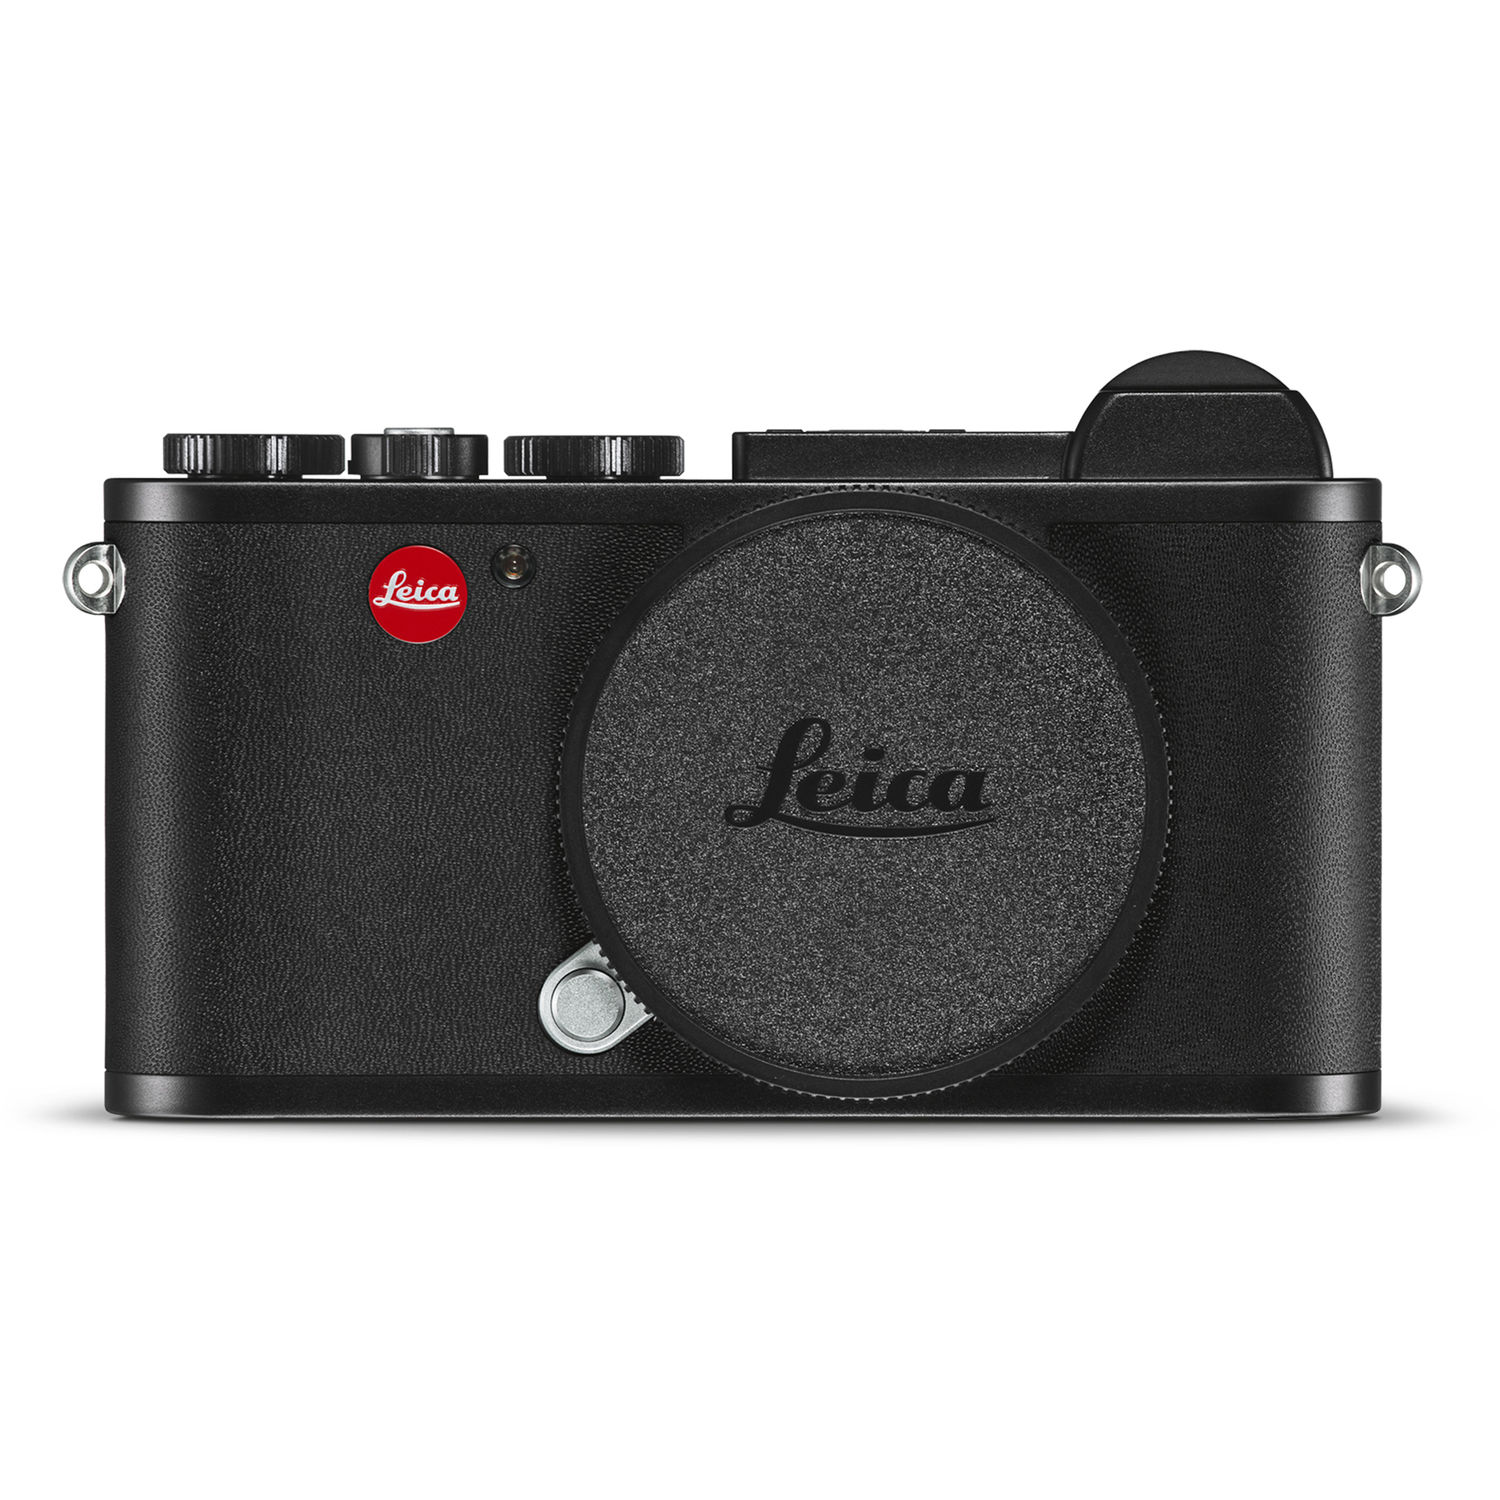 Leica CL Mirrorless Digital Camera (Black)